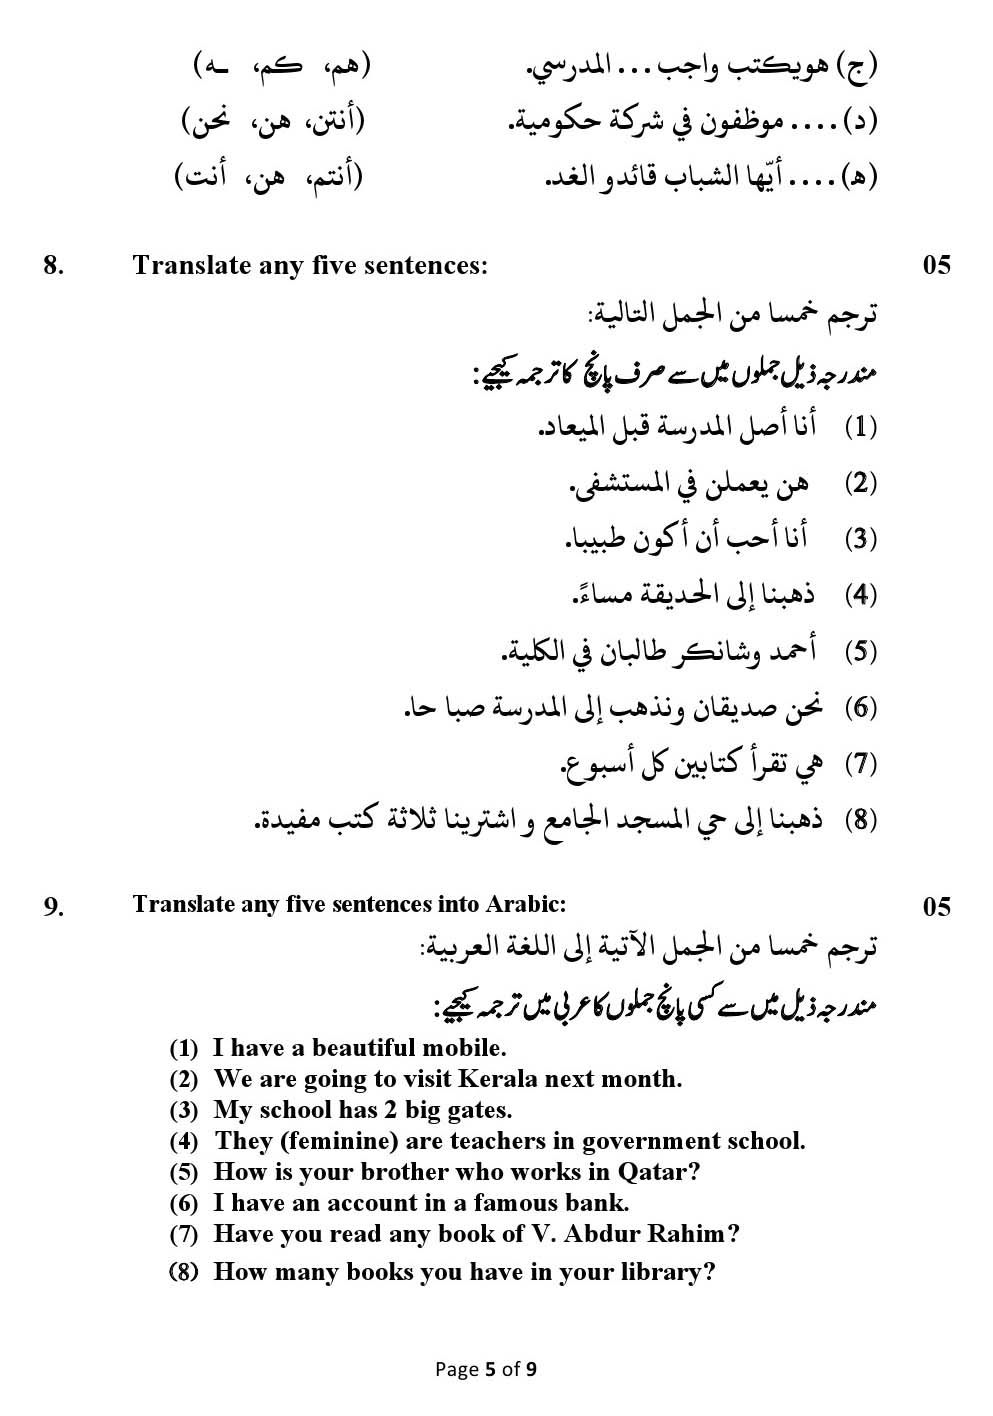 Arabic CBSE Class X Sample Question Paper 2018-19 - Image 5